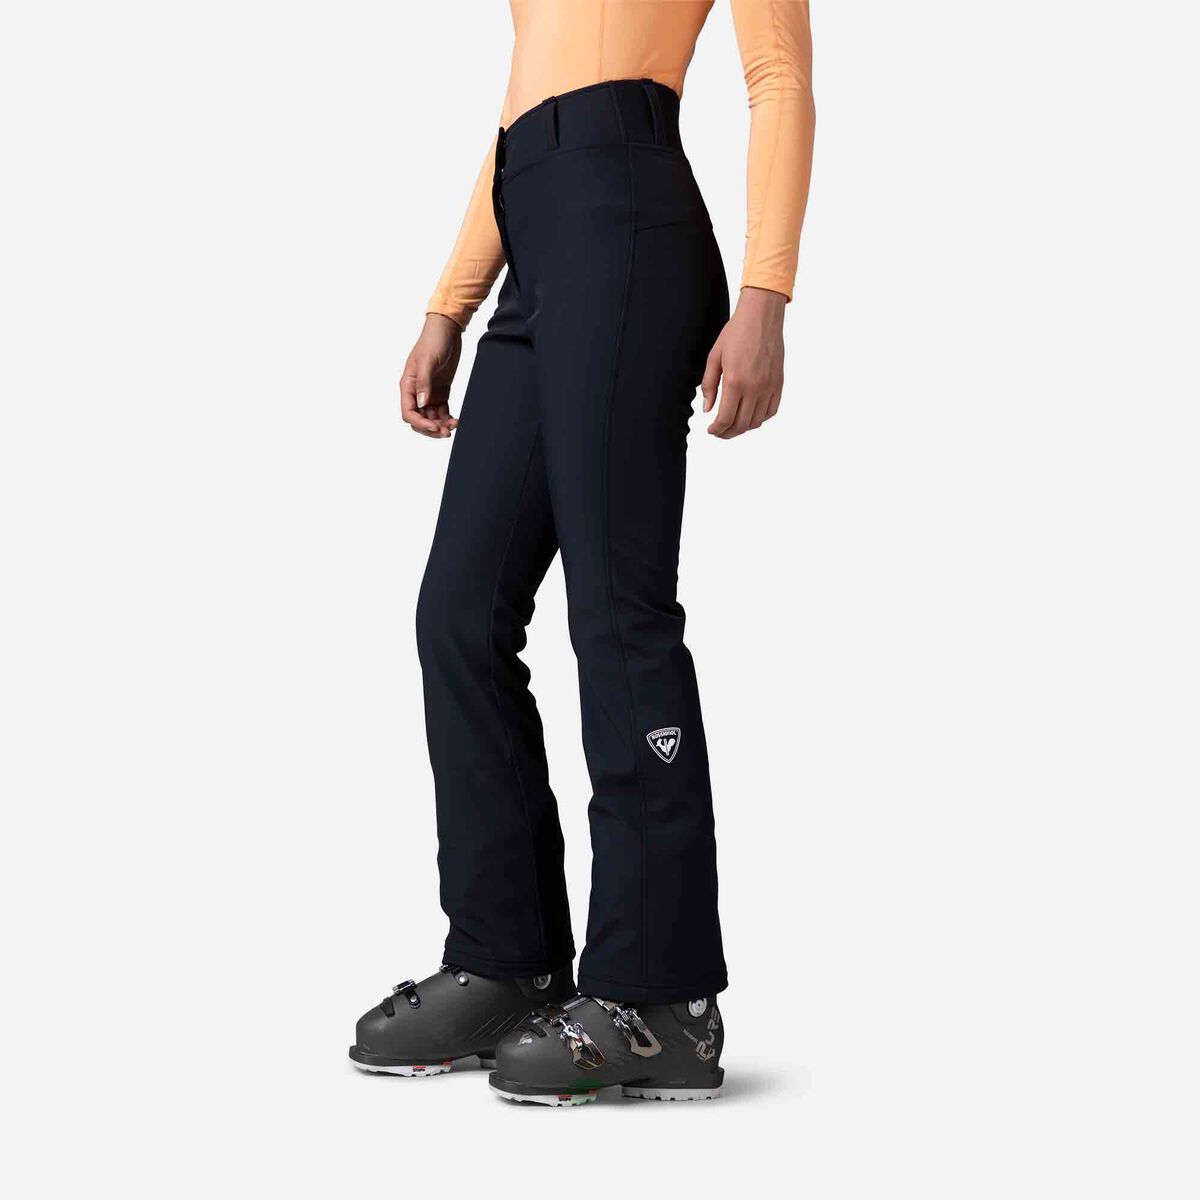 Rossignol Women's Soft Shell Ski pants black